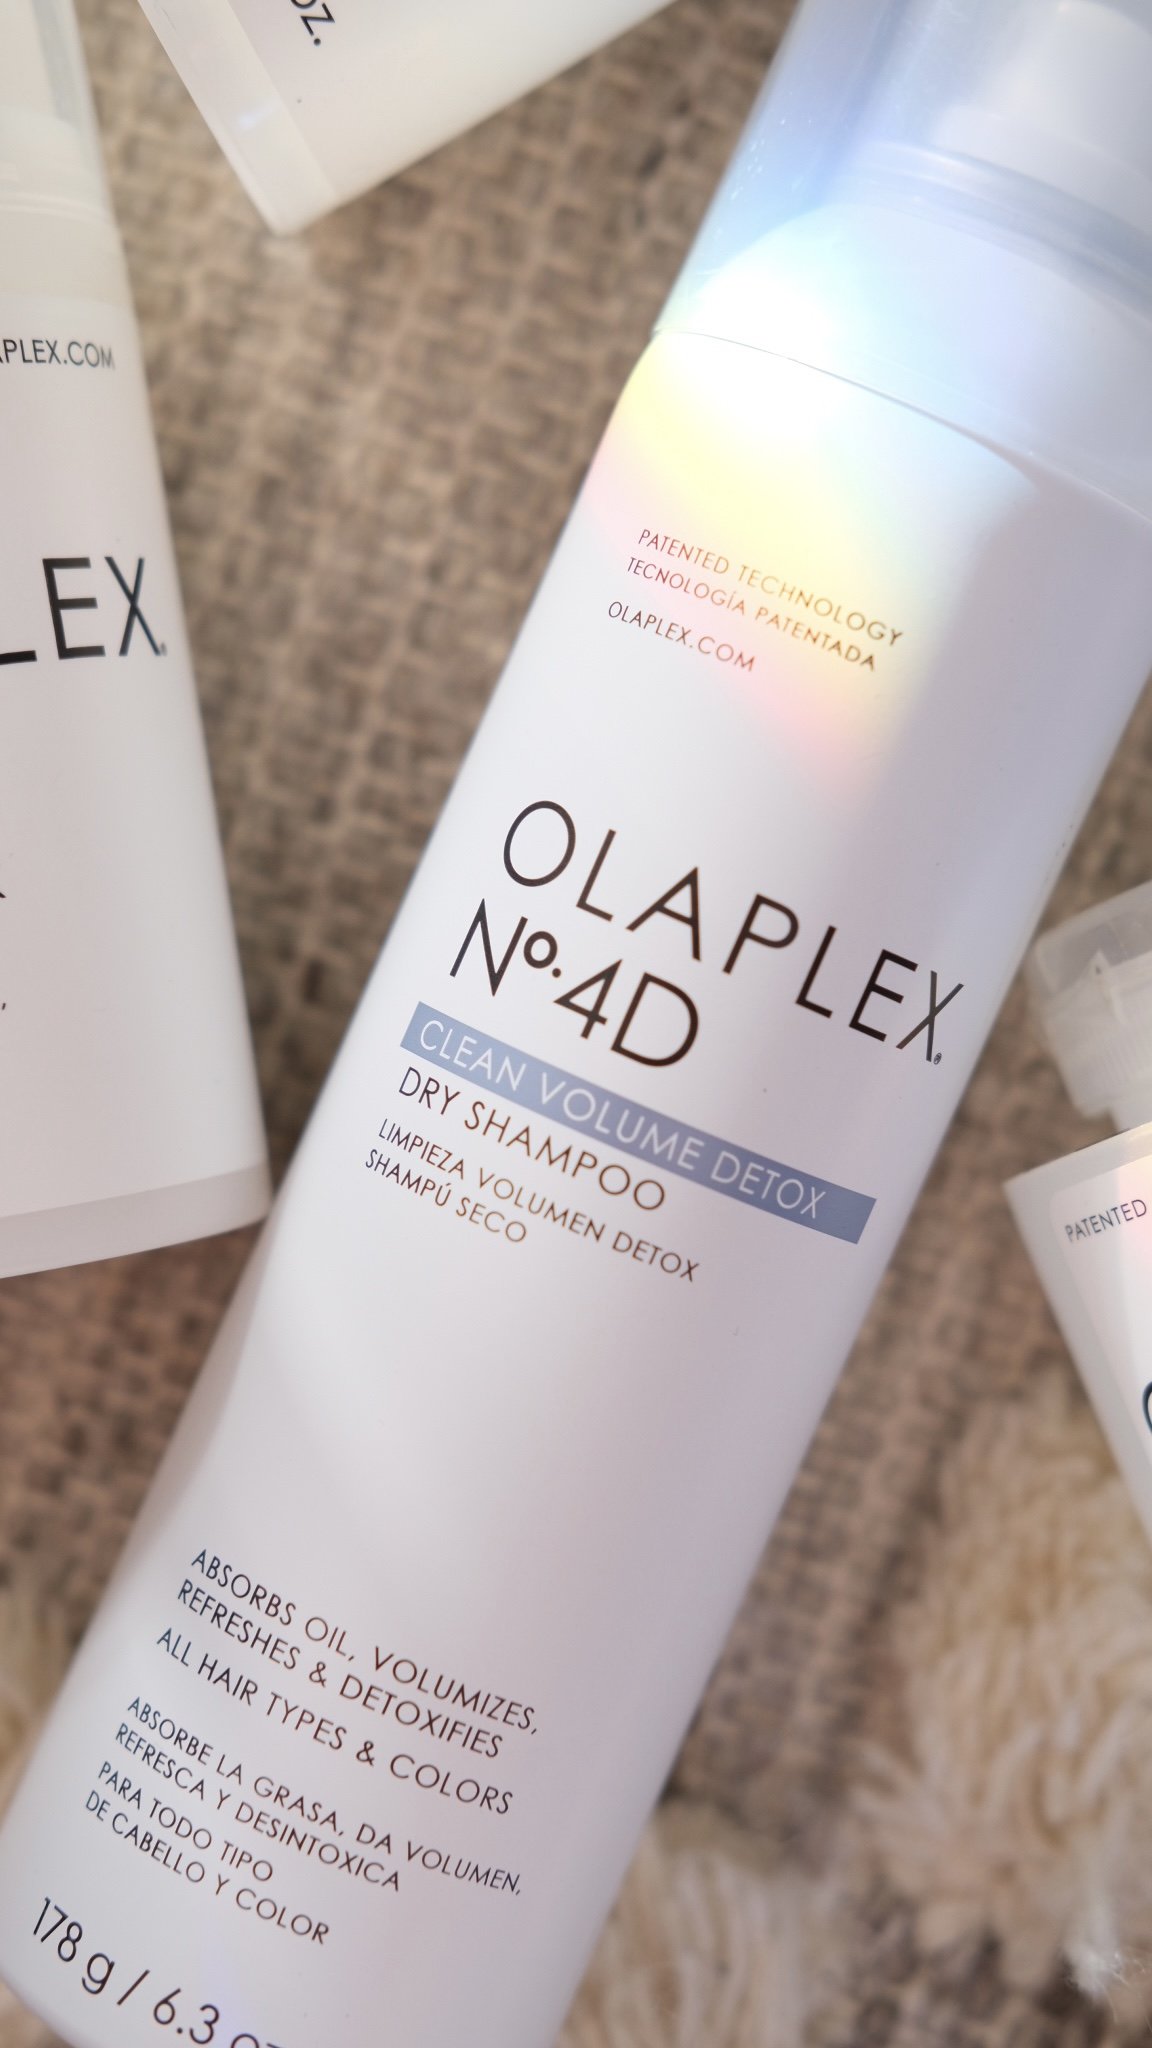 olaplex dry shampoo reviews. Olaplex 4D shampoo reviews. Is Olaplex dry shampoo worth it